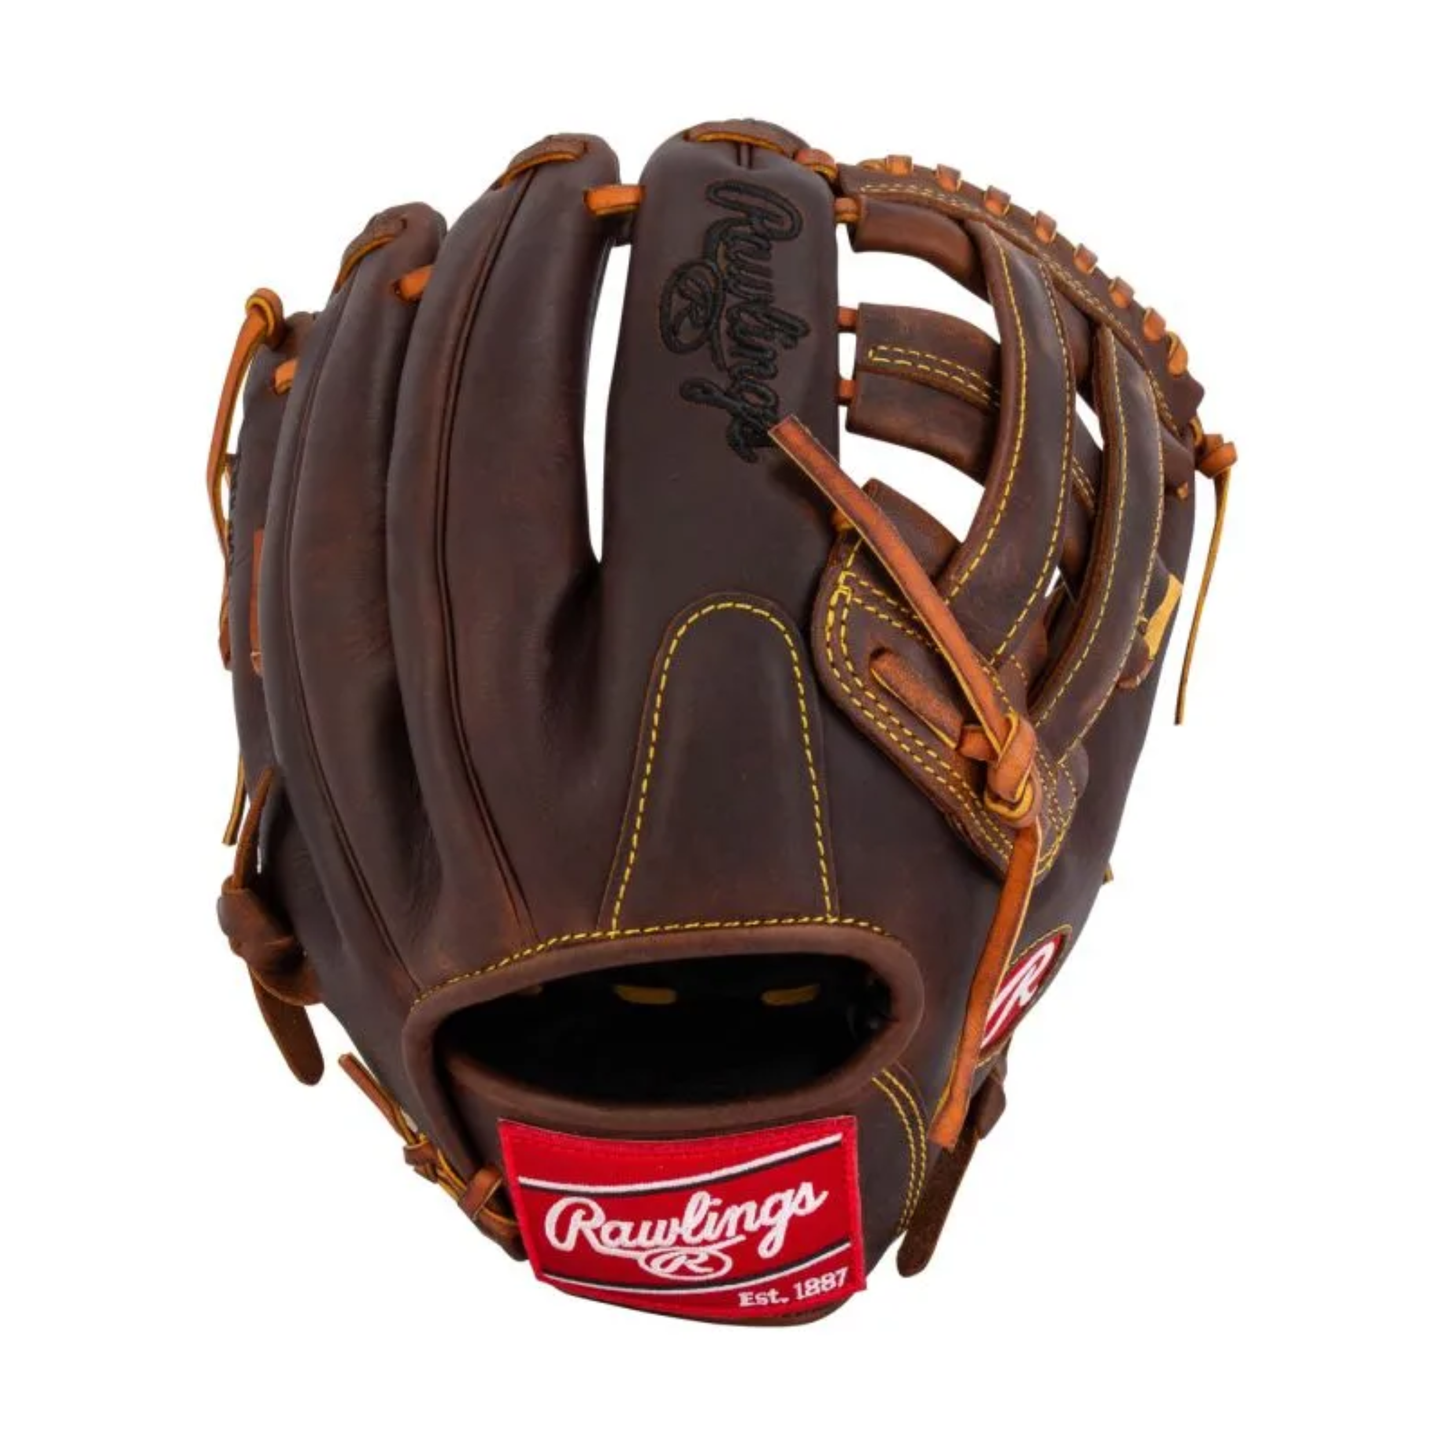 NOLAN ARENADO Rawlings USA Heart of the Hide 12" Baseball Infield Glove RPRORNA28